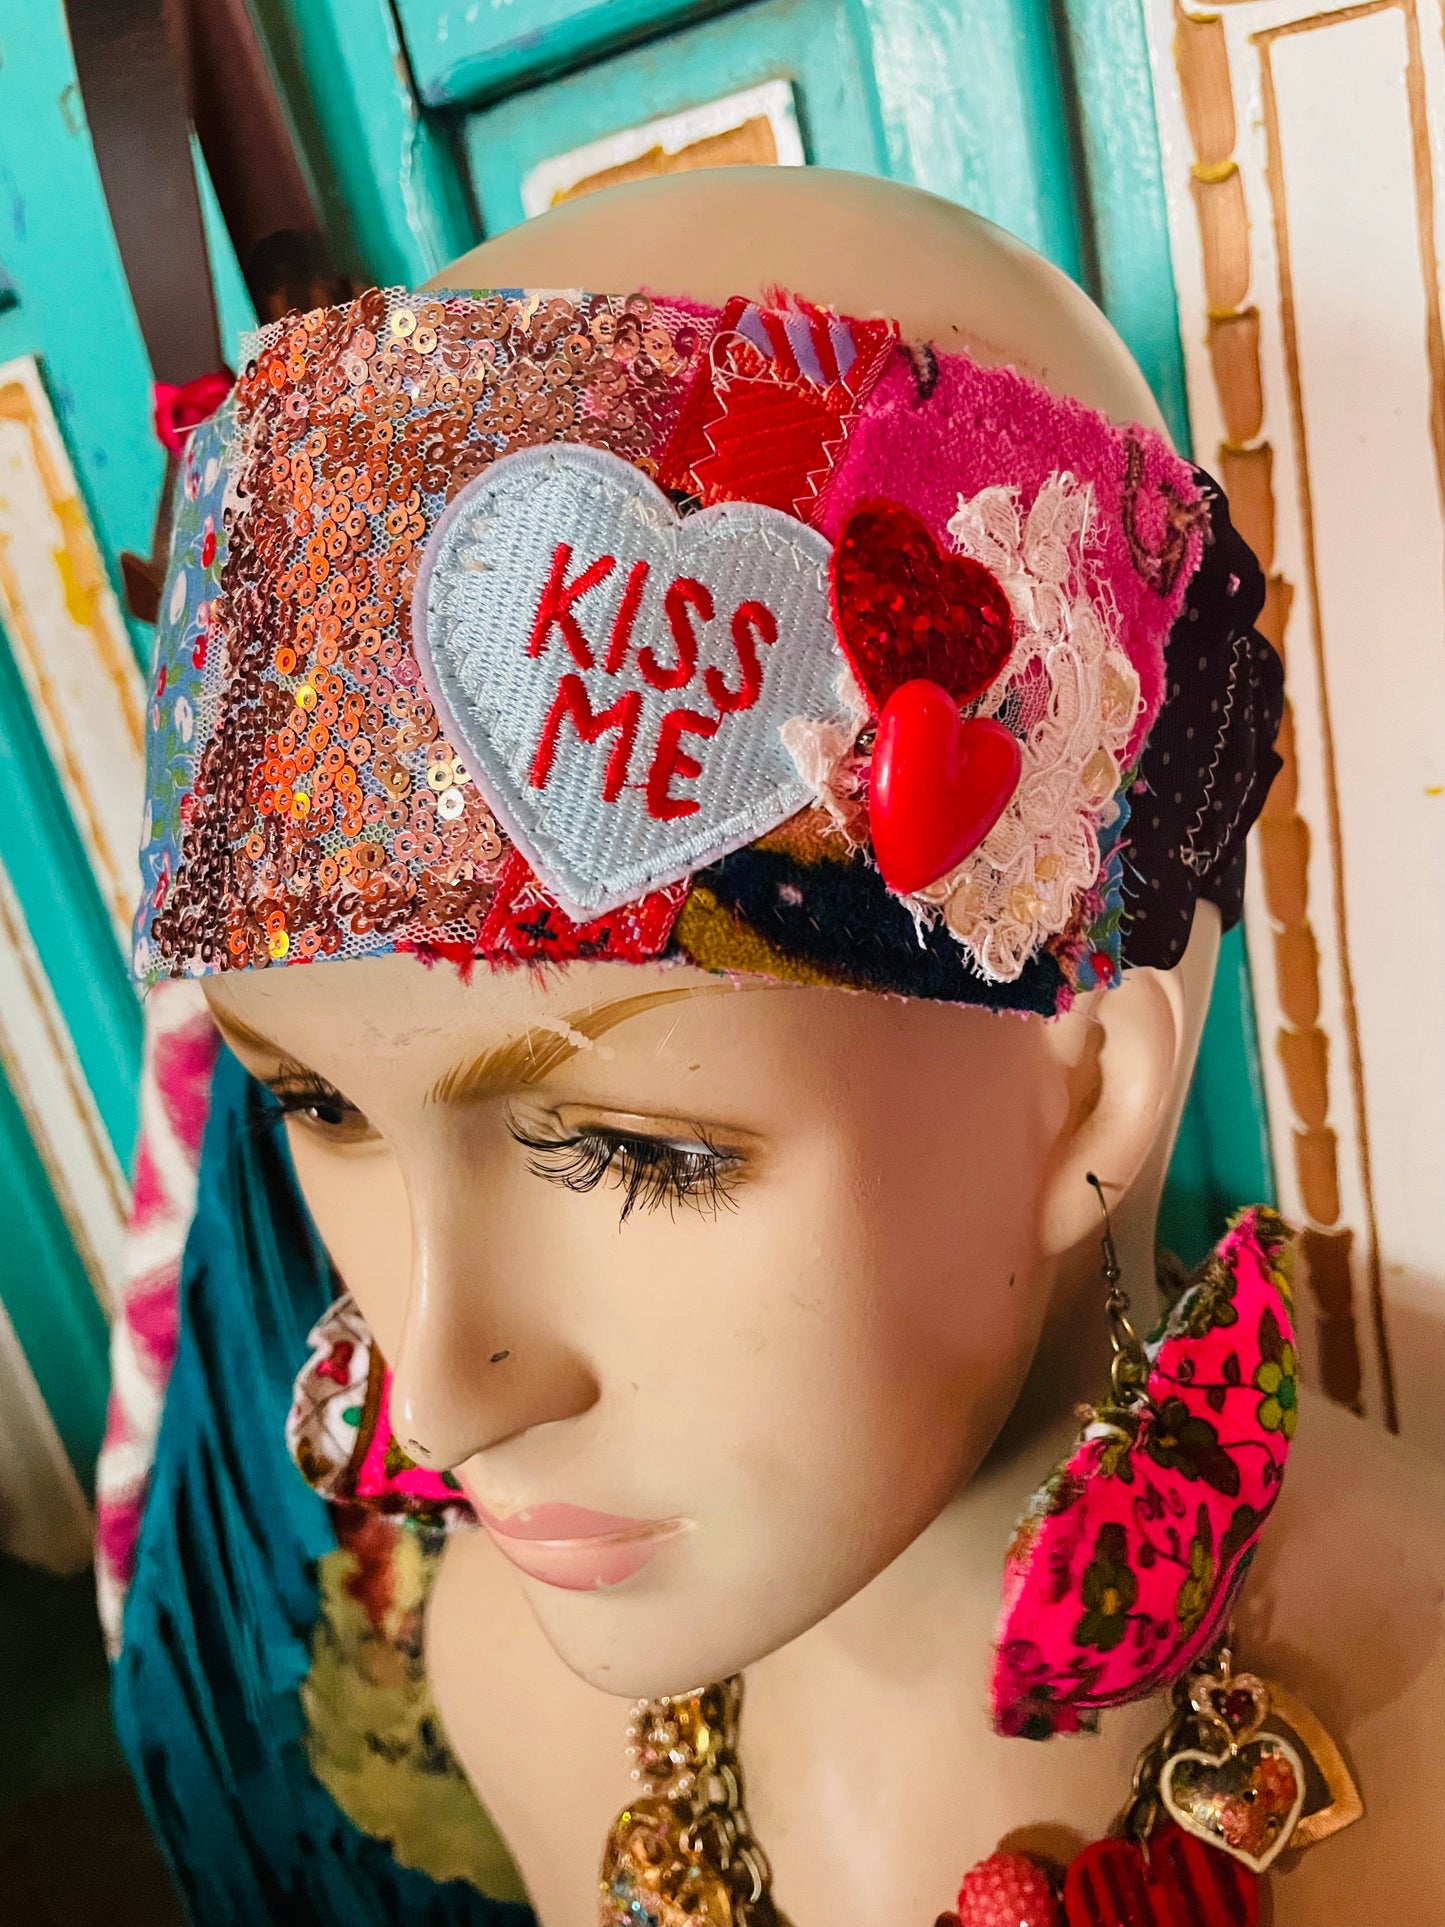 Kiss Me headband